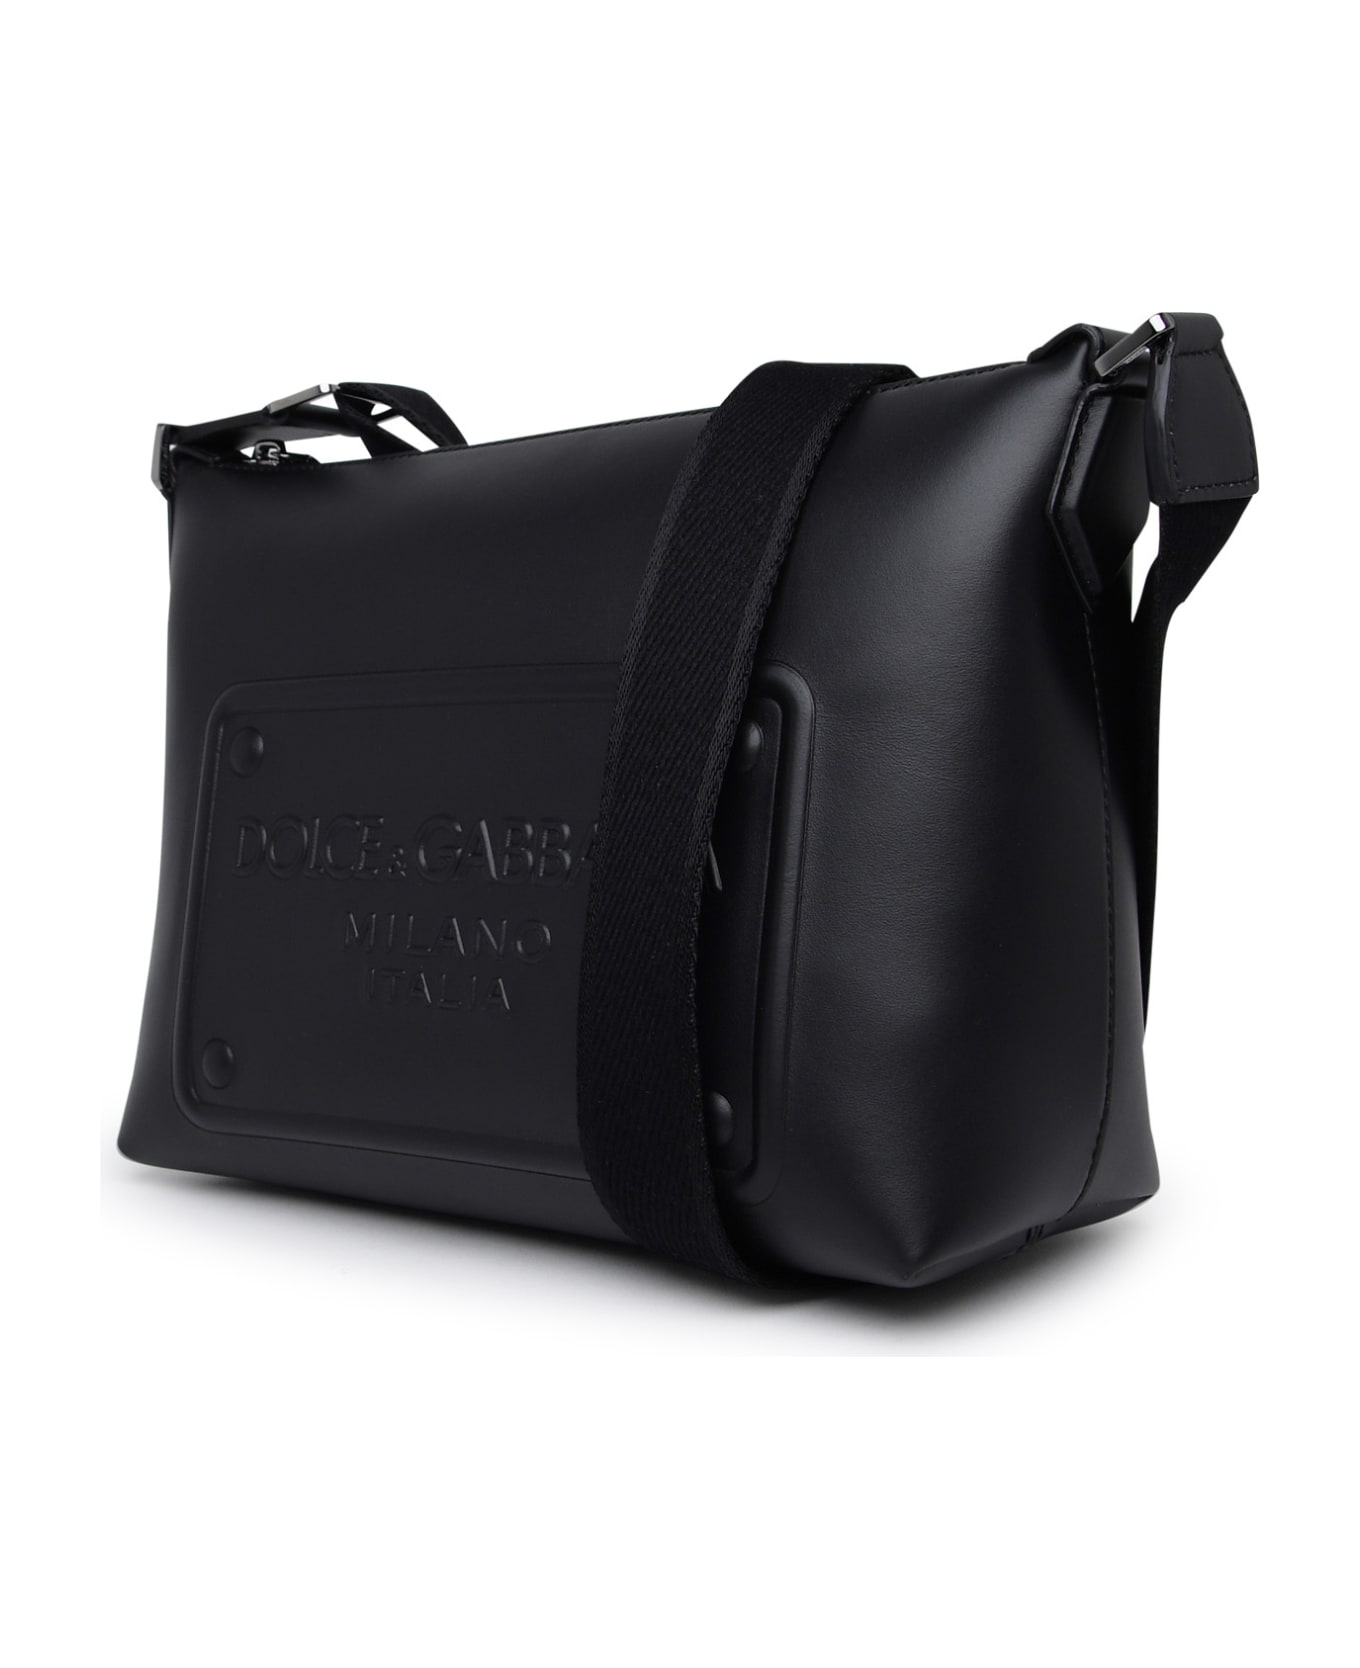 Dolce & Gabbana Black Leather Crossbody Bag - Black